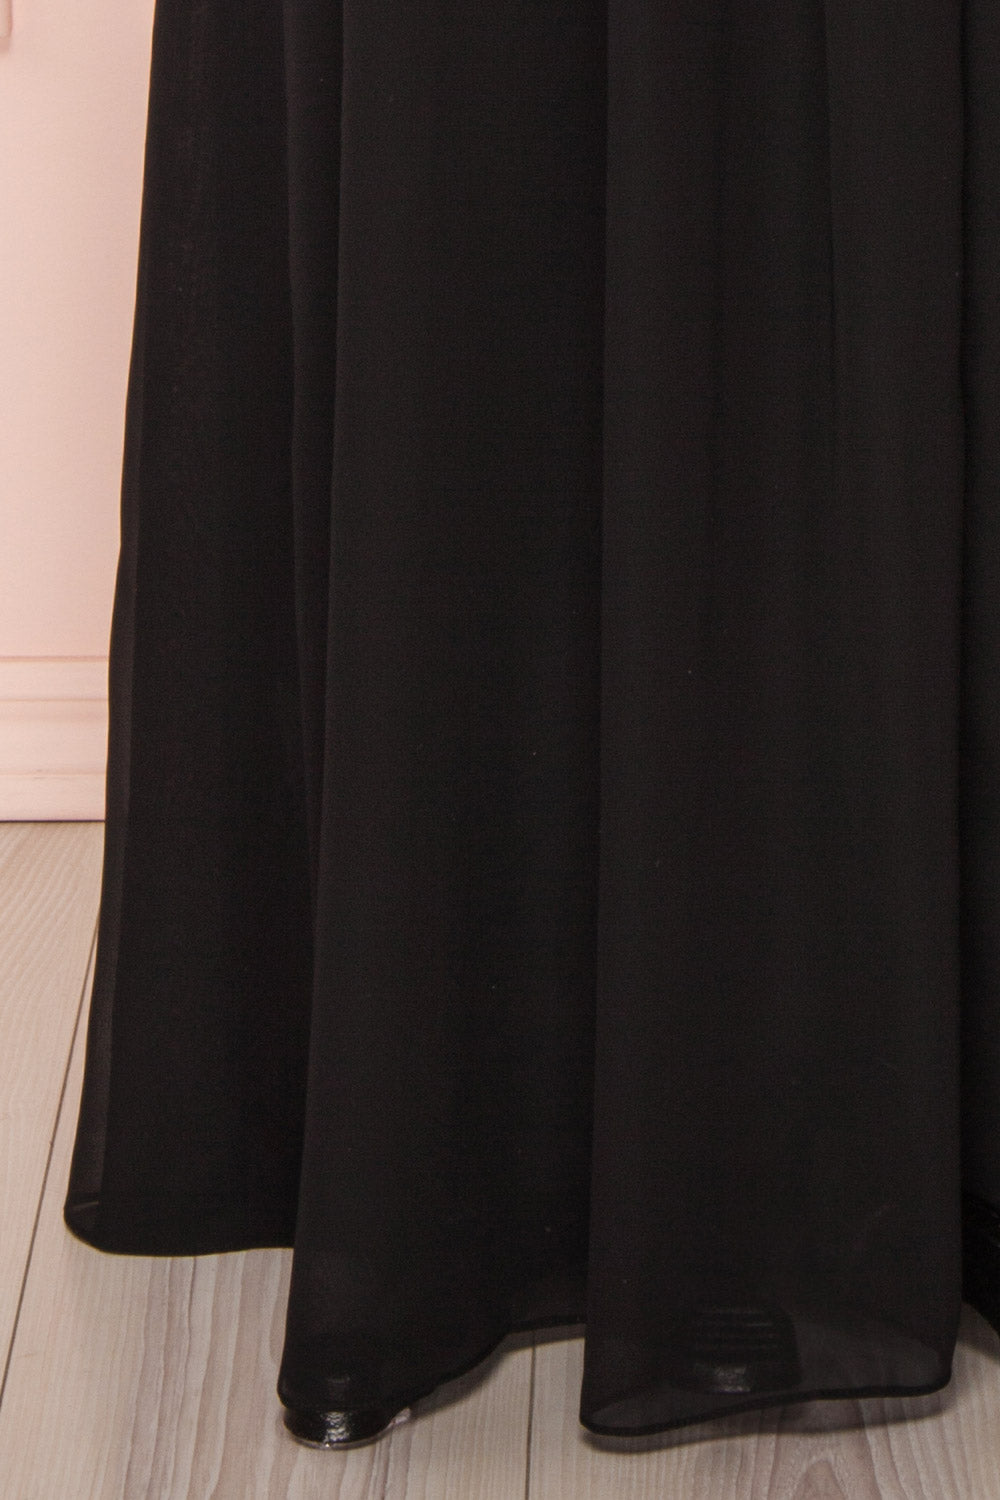 Sabira Black Maxi Dress | Robe Noire skirt | Boutique 1861